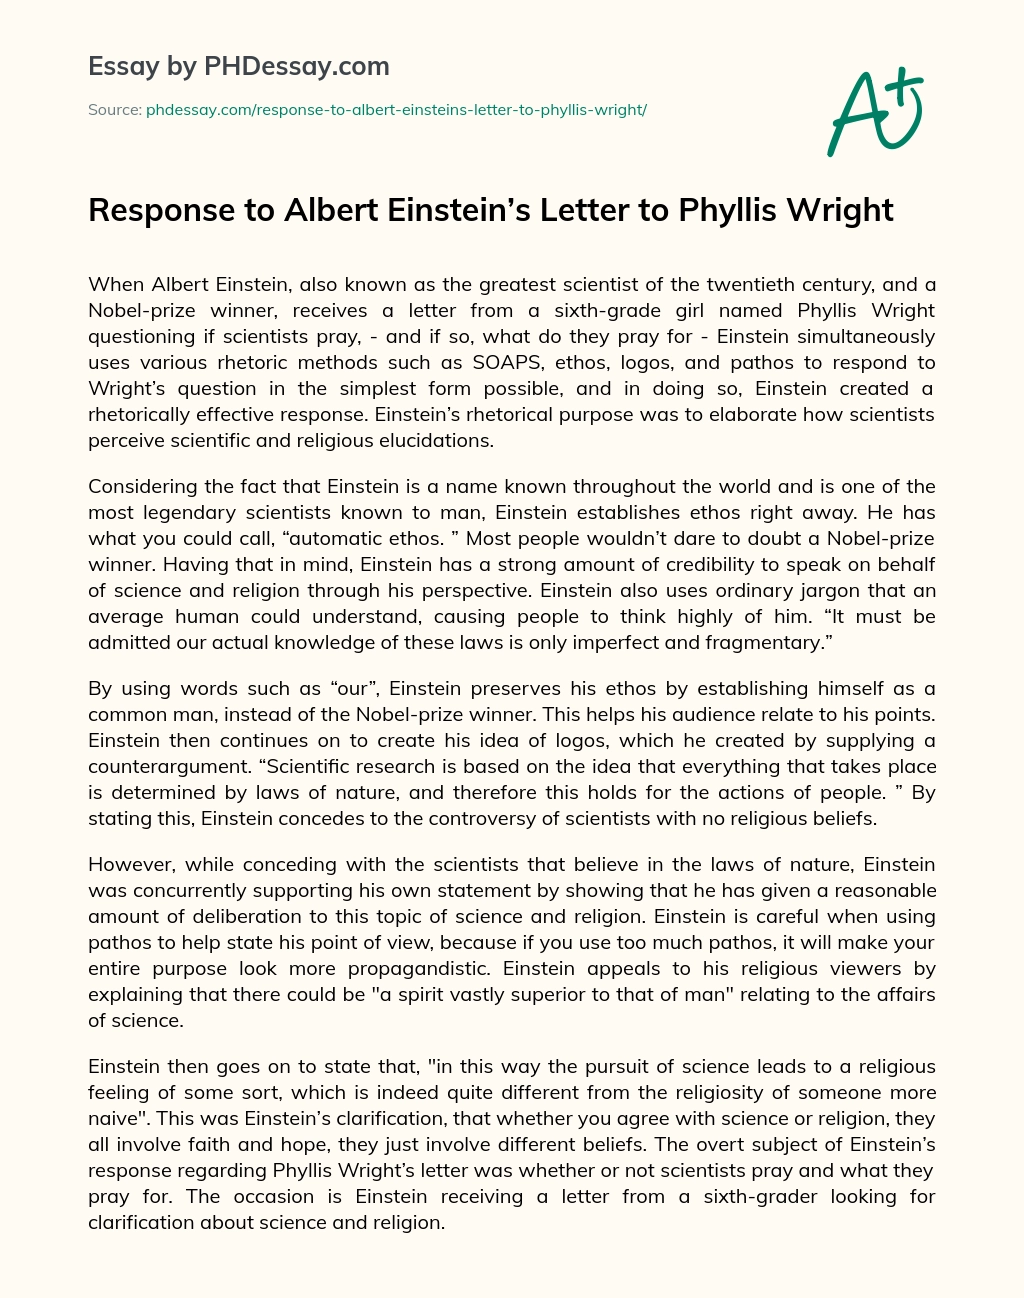 Response to Albert Einstein’s Letter to Phyllis Wright essay